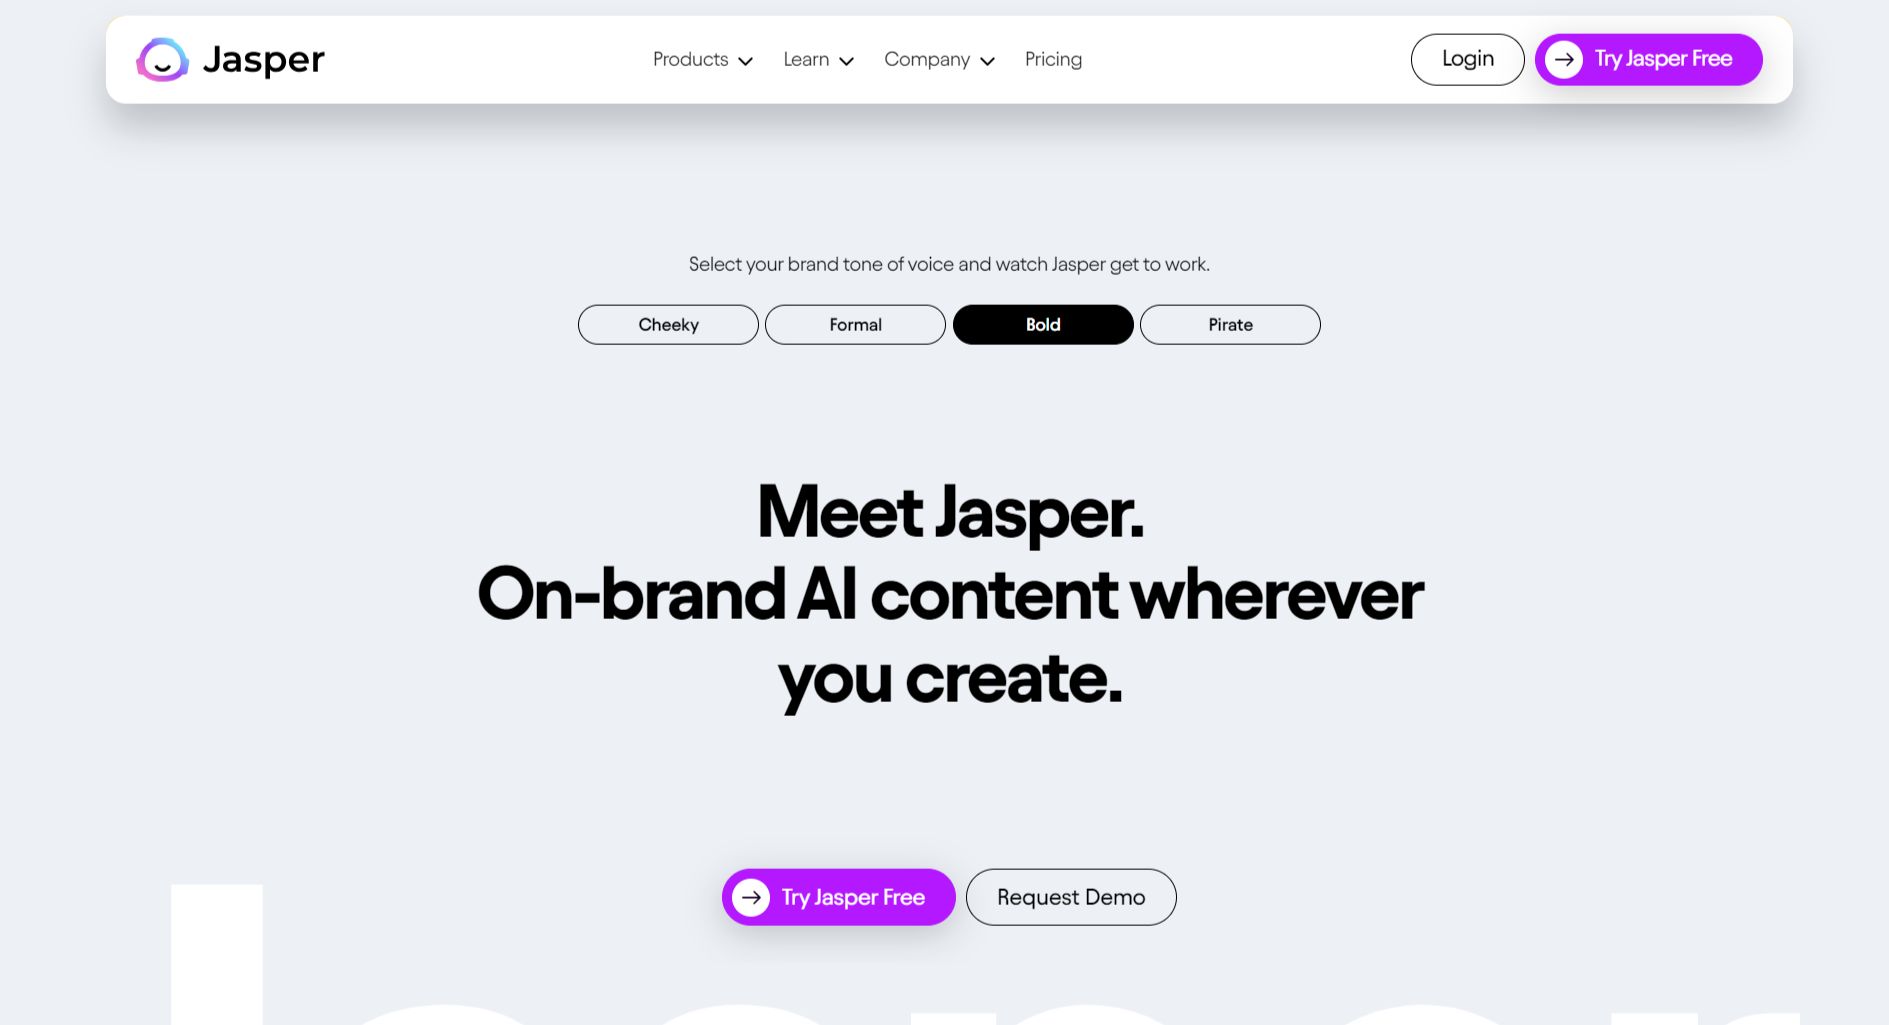 Jasper’s homepage